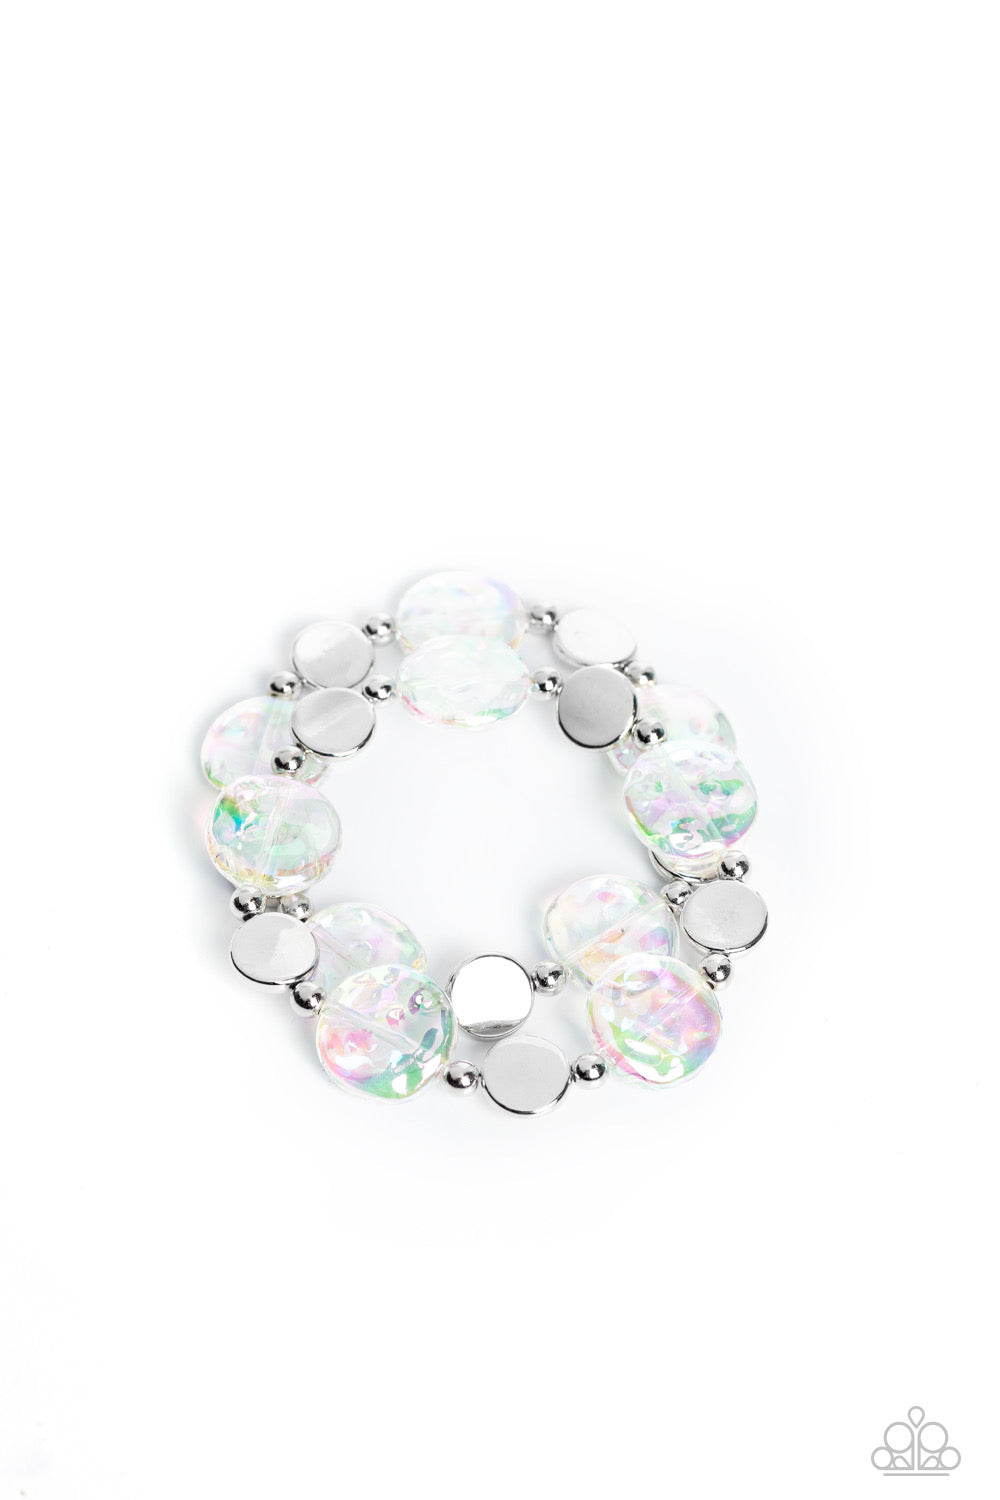 Cute Bracelets - Paparazzi Discus Throw - White Bracelet Paparazzi jewelry image